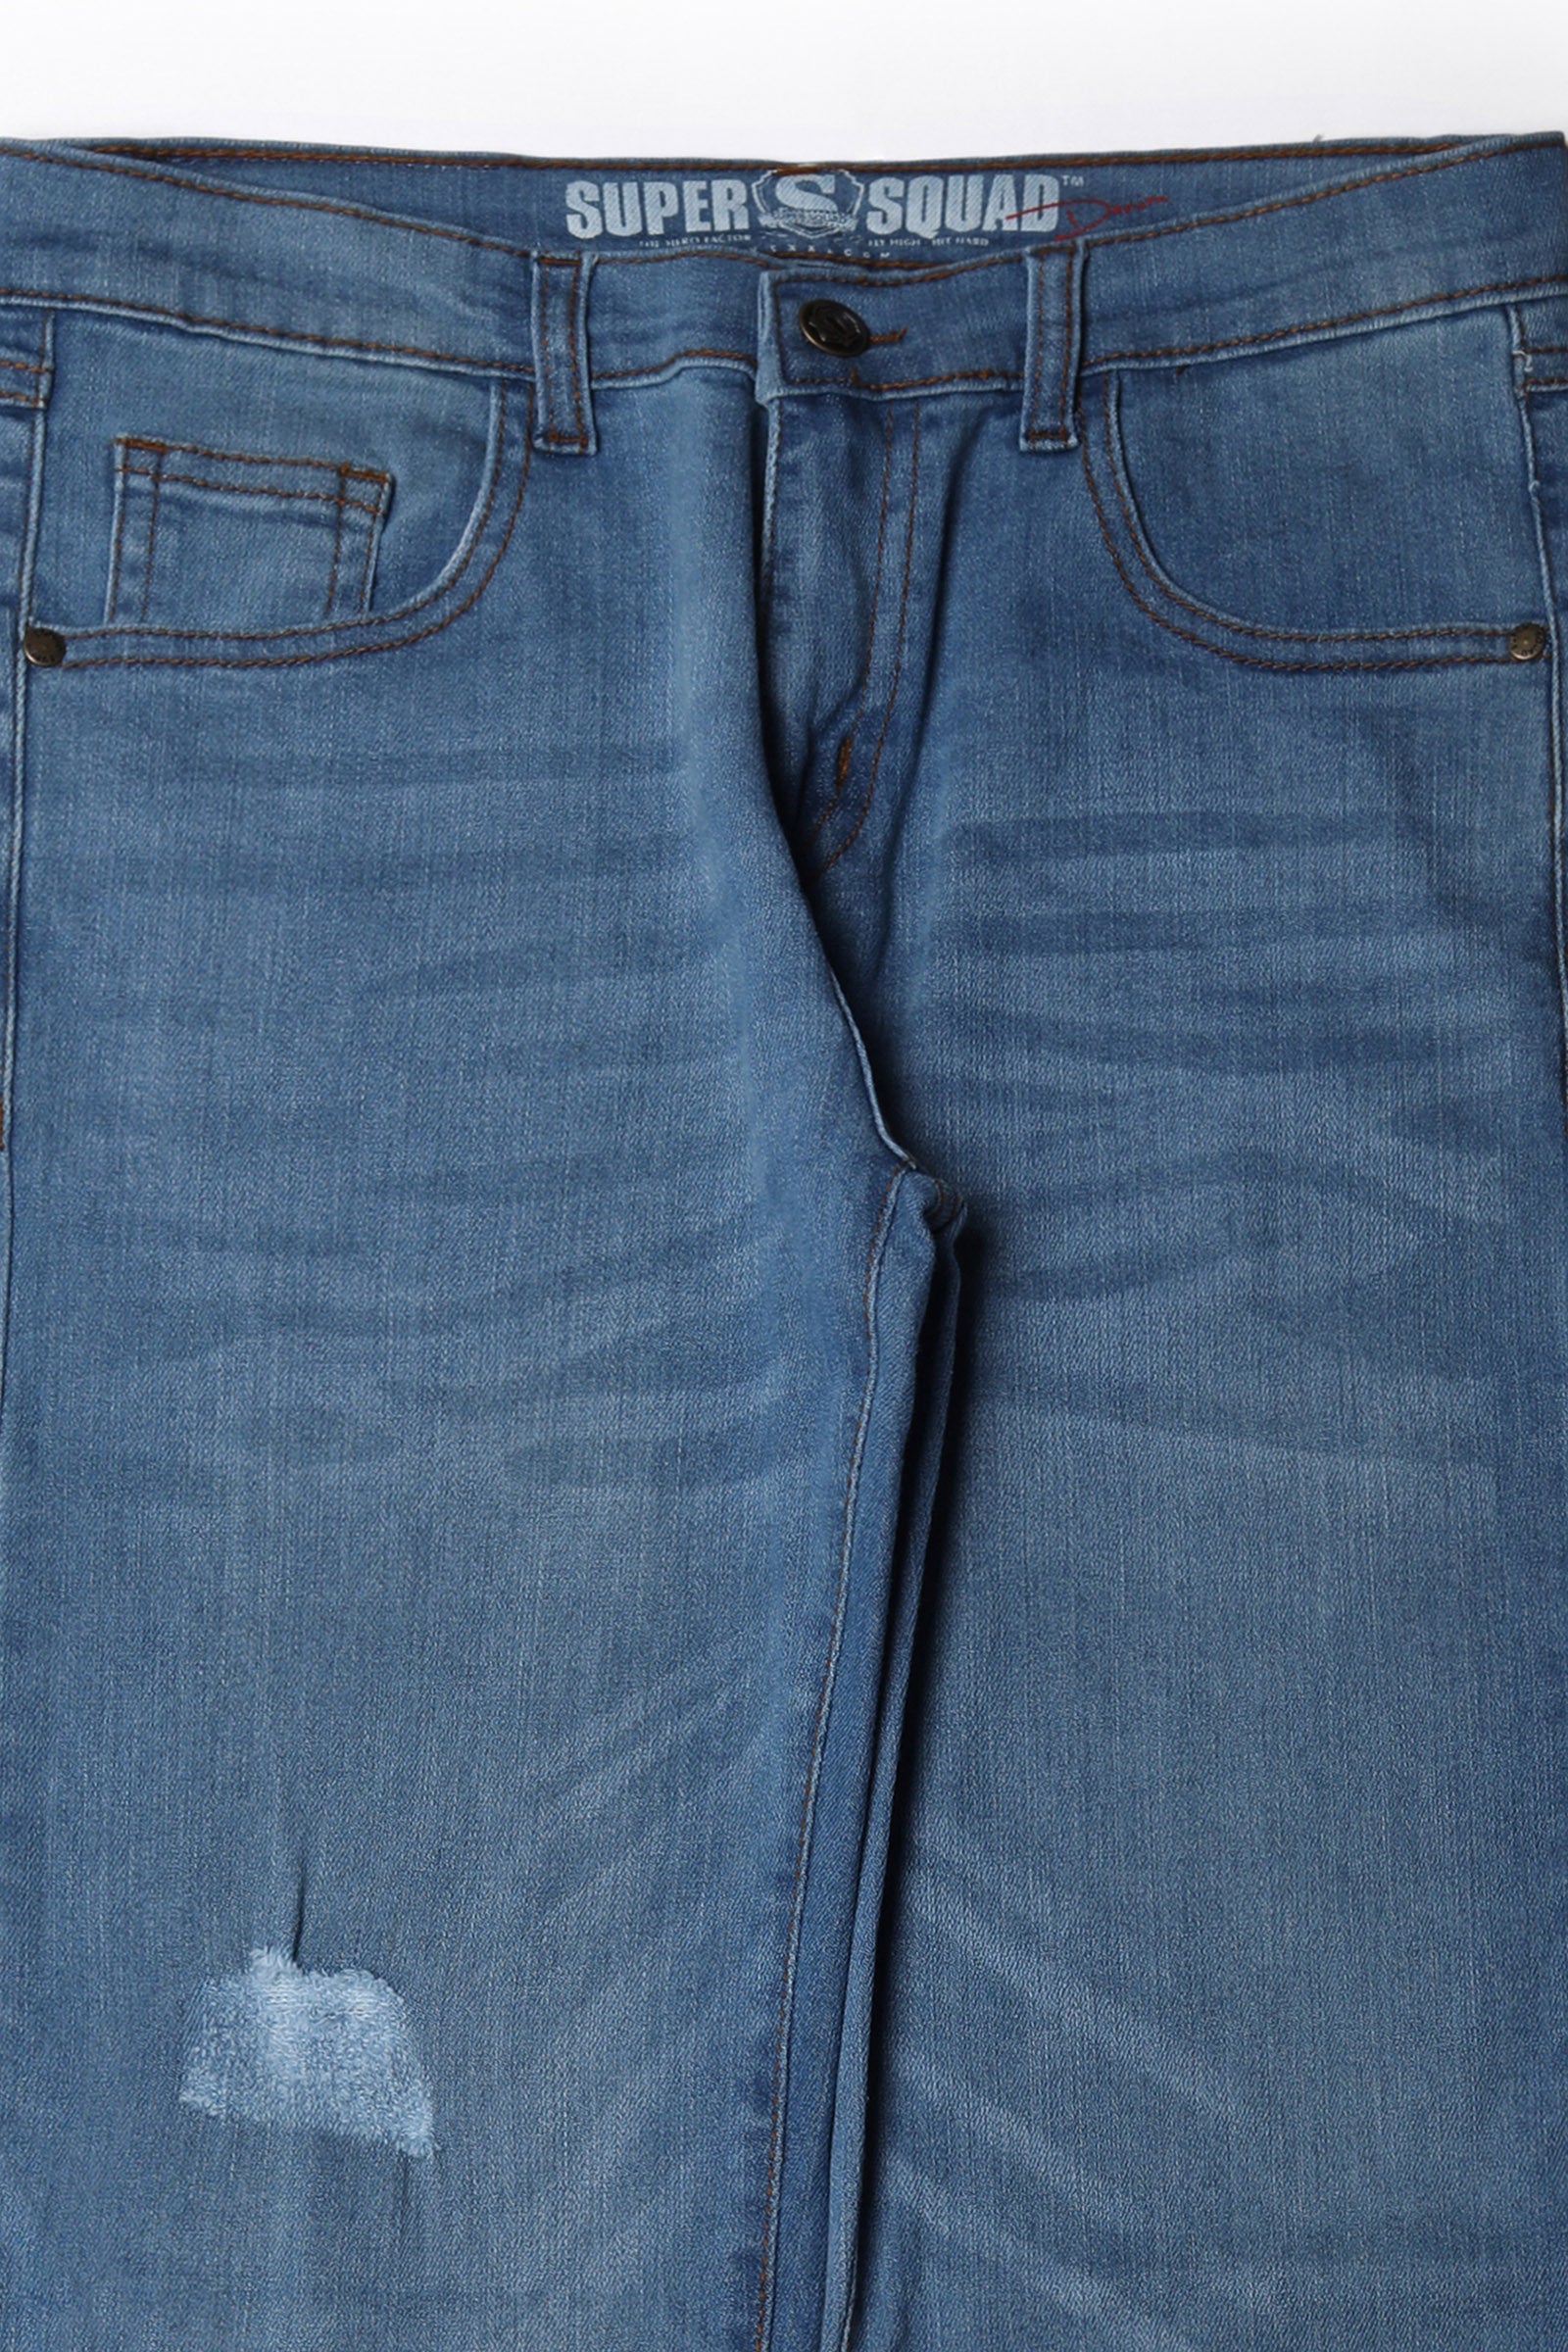 Straight Pants (SSBD-214R)